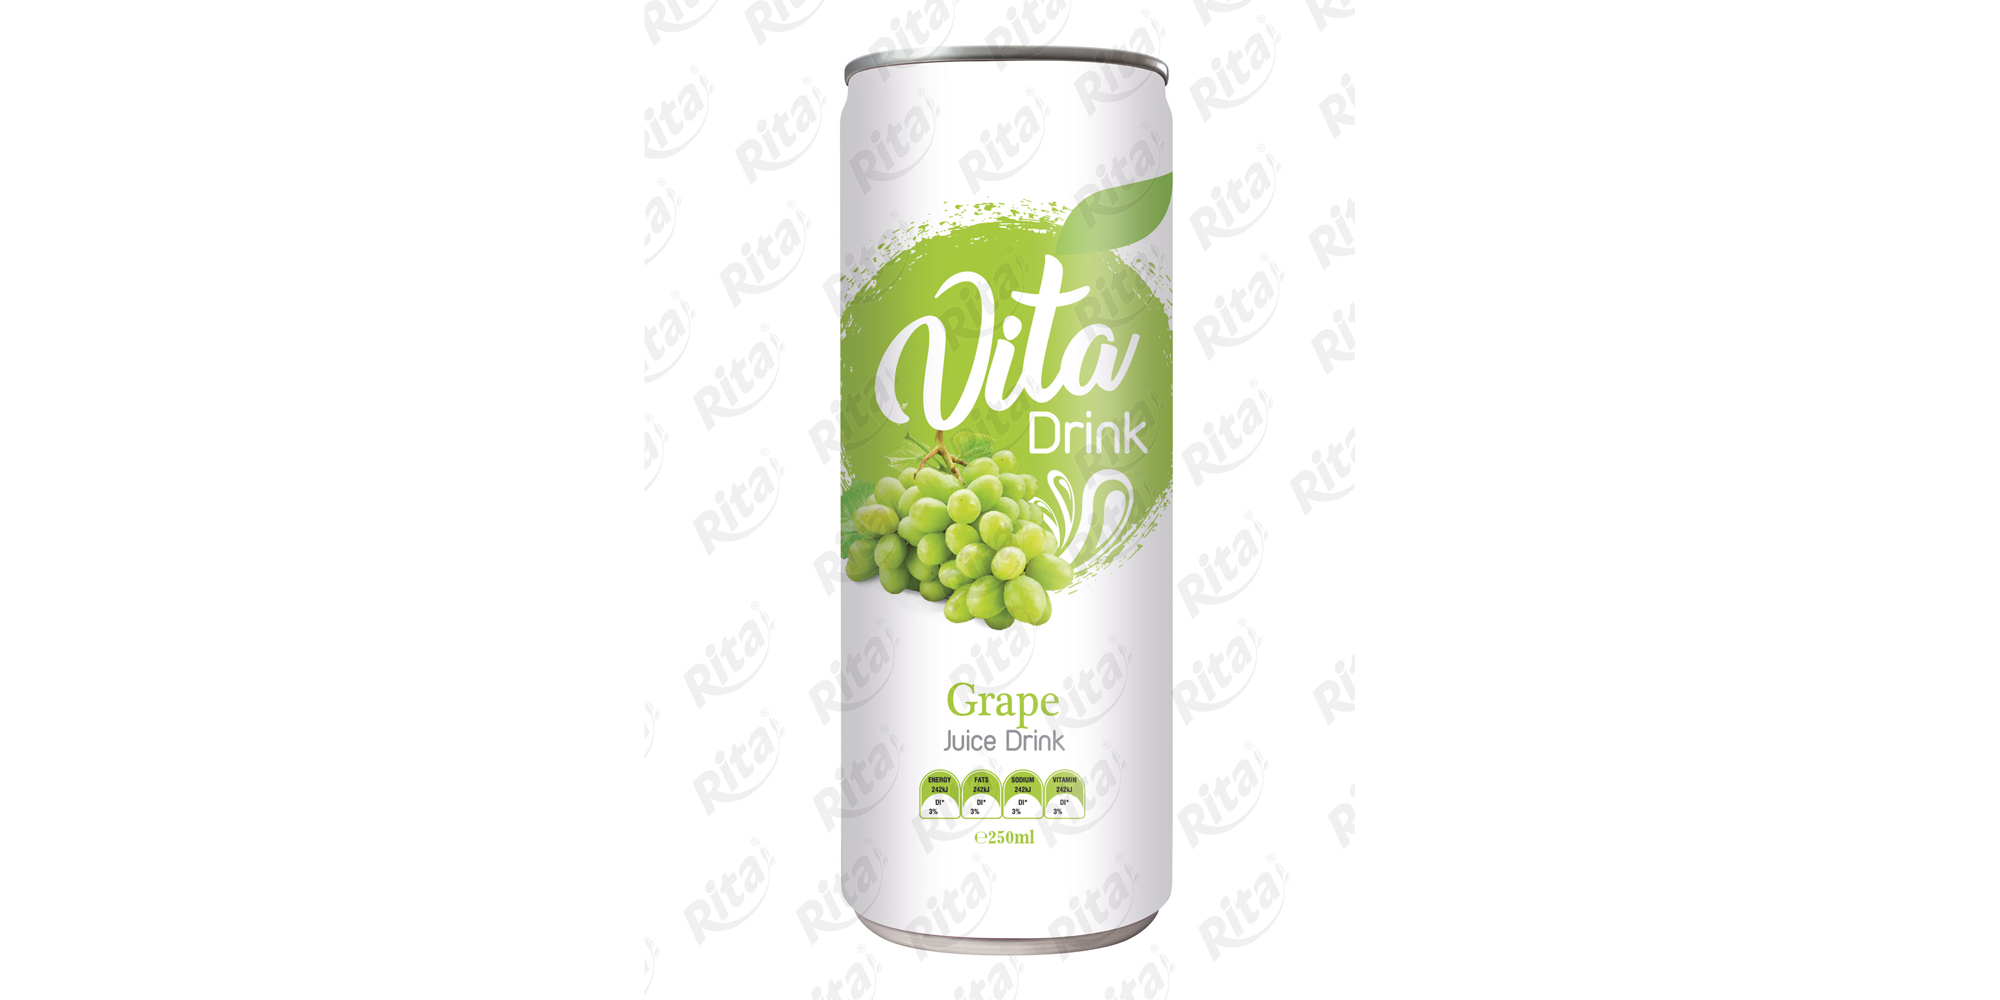 Grape juice drink 250ml from RITA US